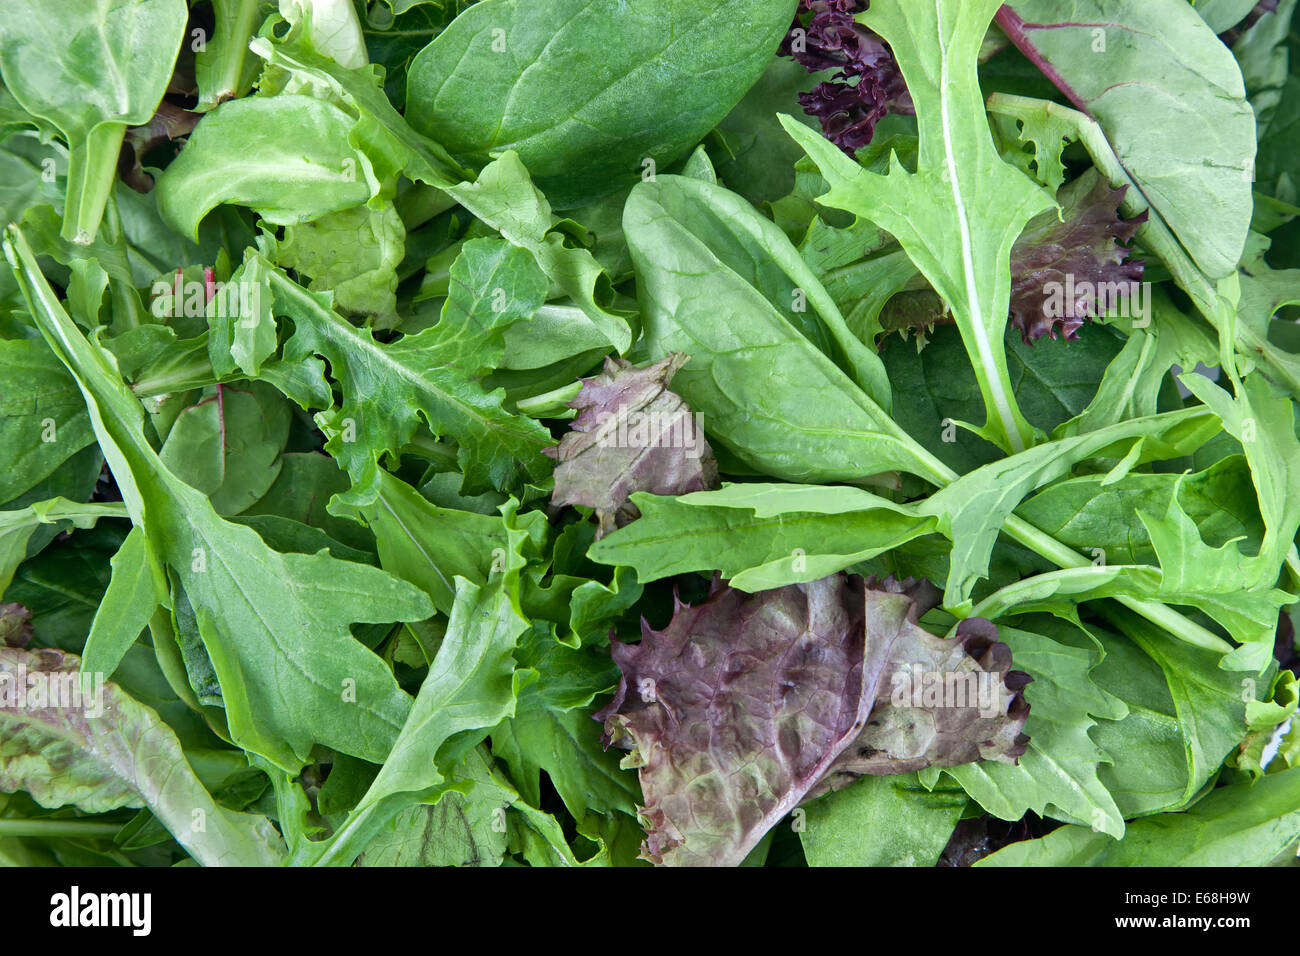 Organico "baby lattuga' 'spring' mix di insalata. Foto Stock